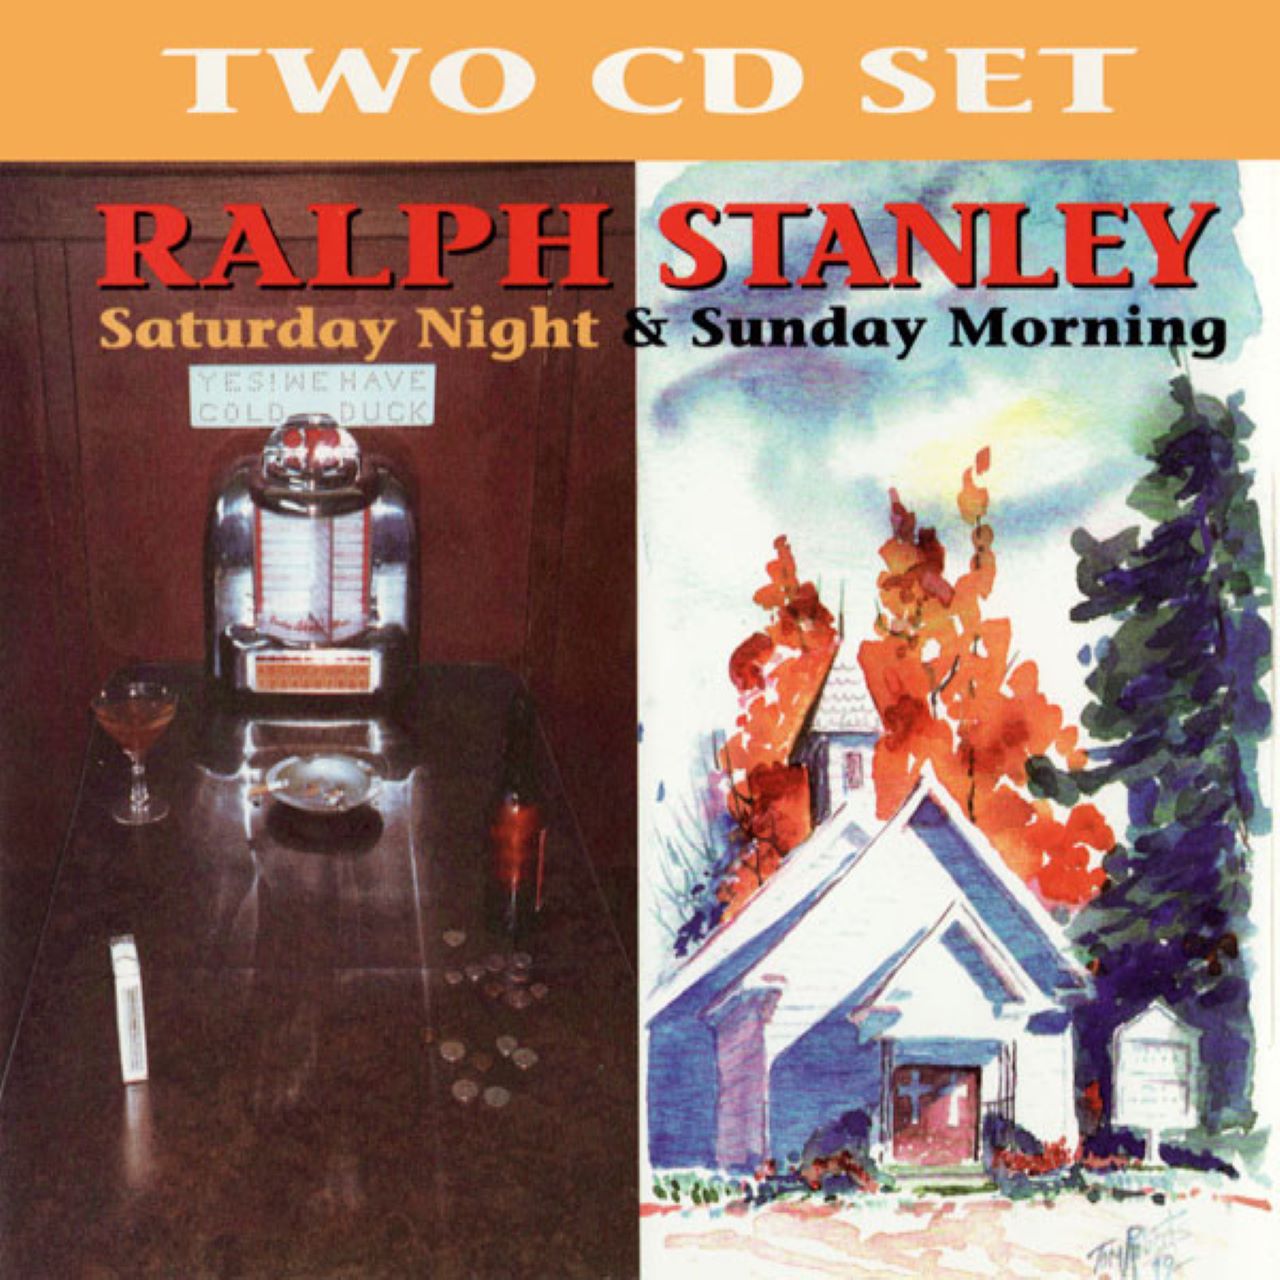 Ralph Stanley - Saturday Night & Sunday Morning cover album